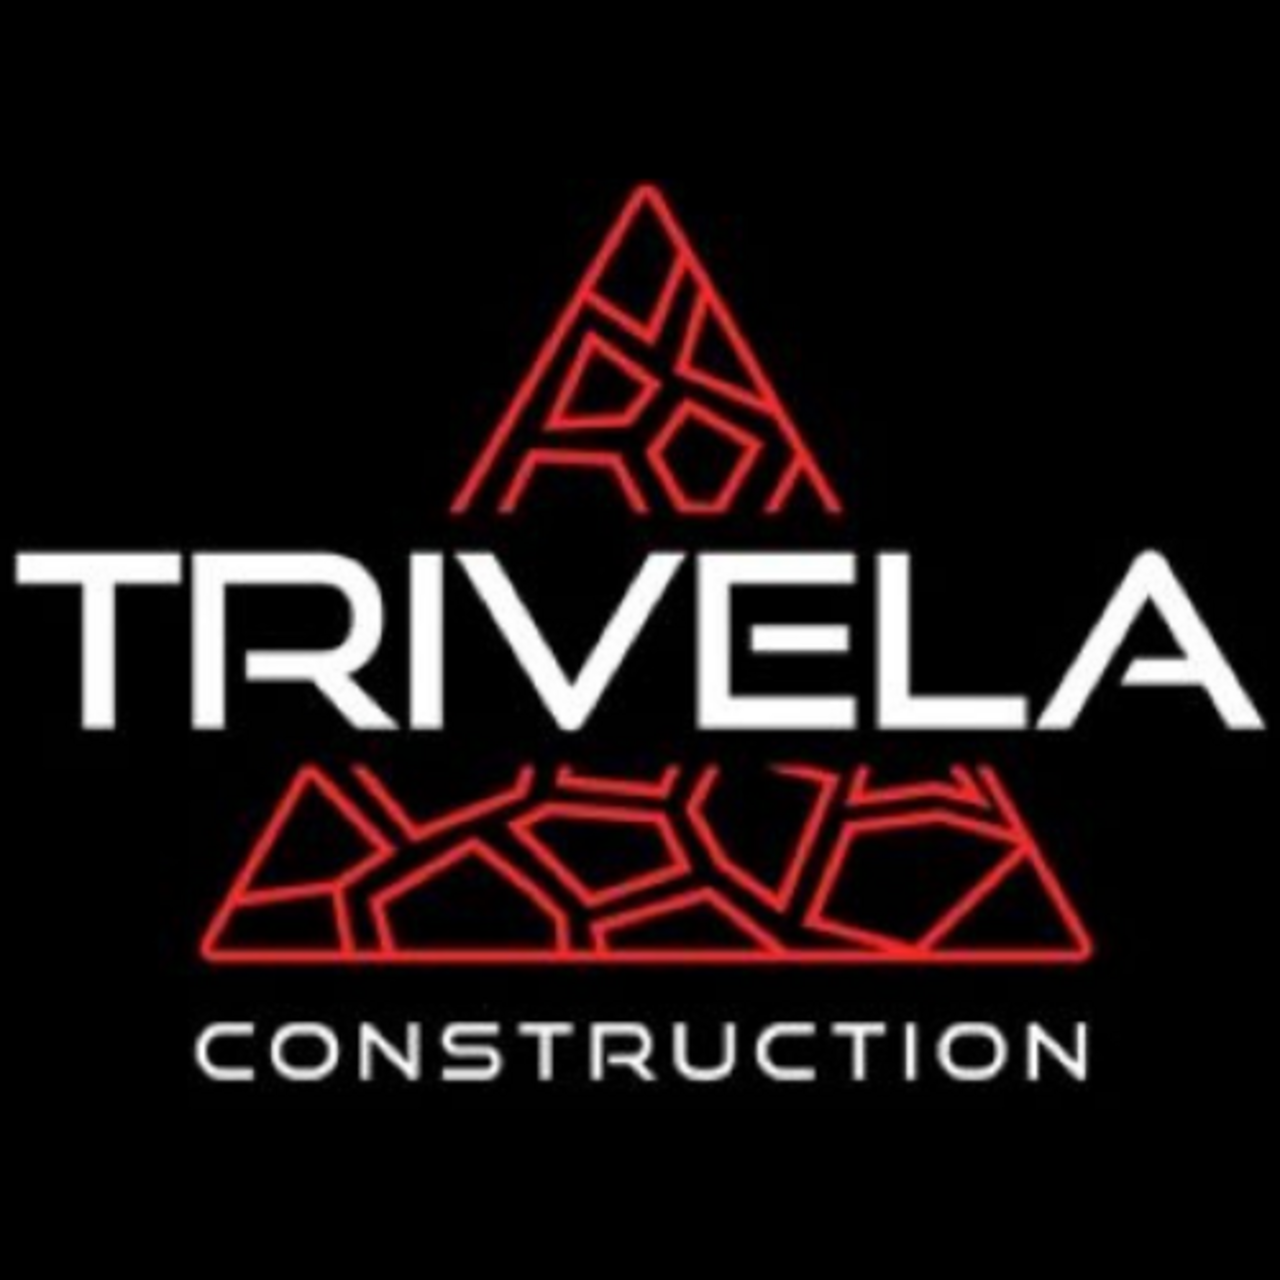 Trivela Construction's logo